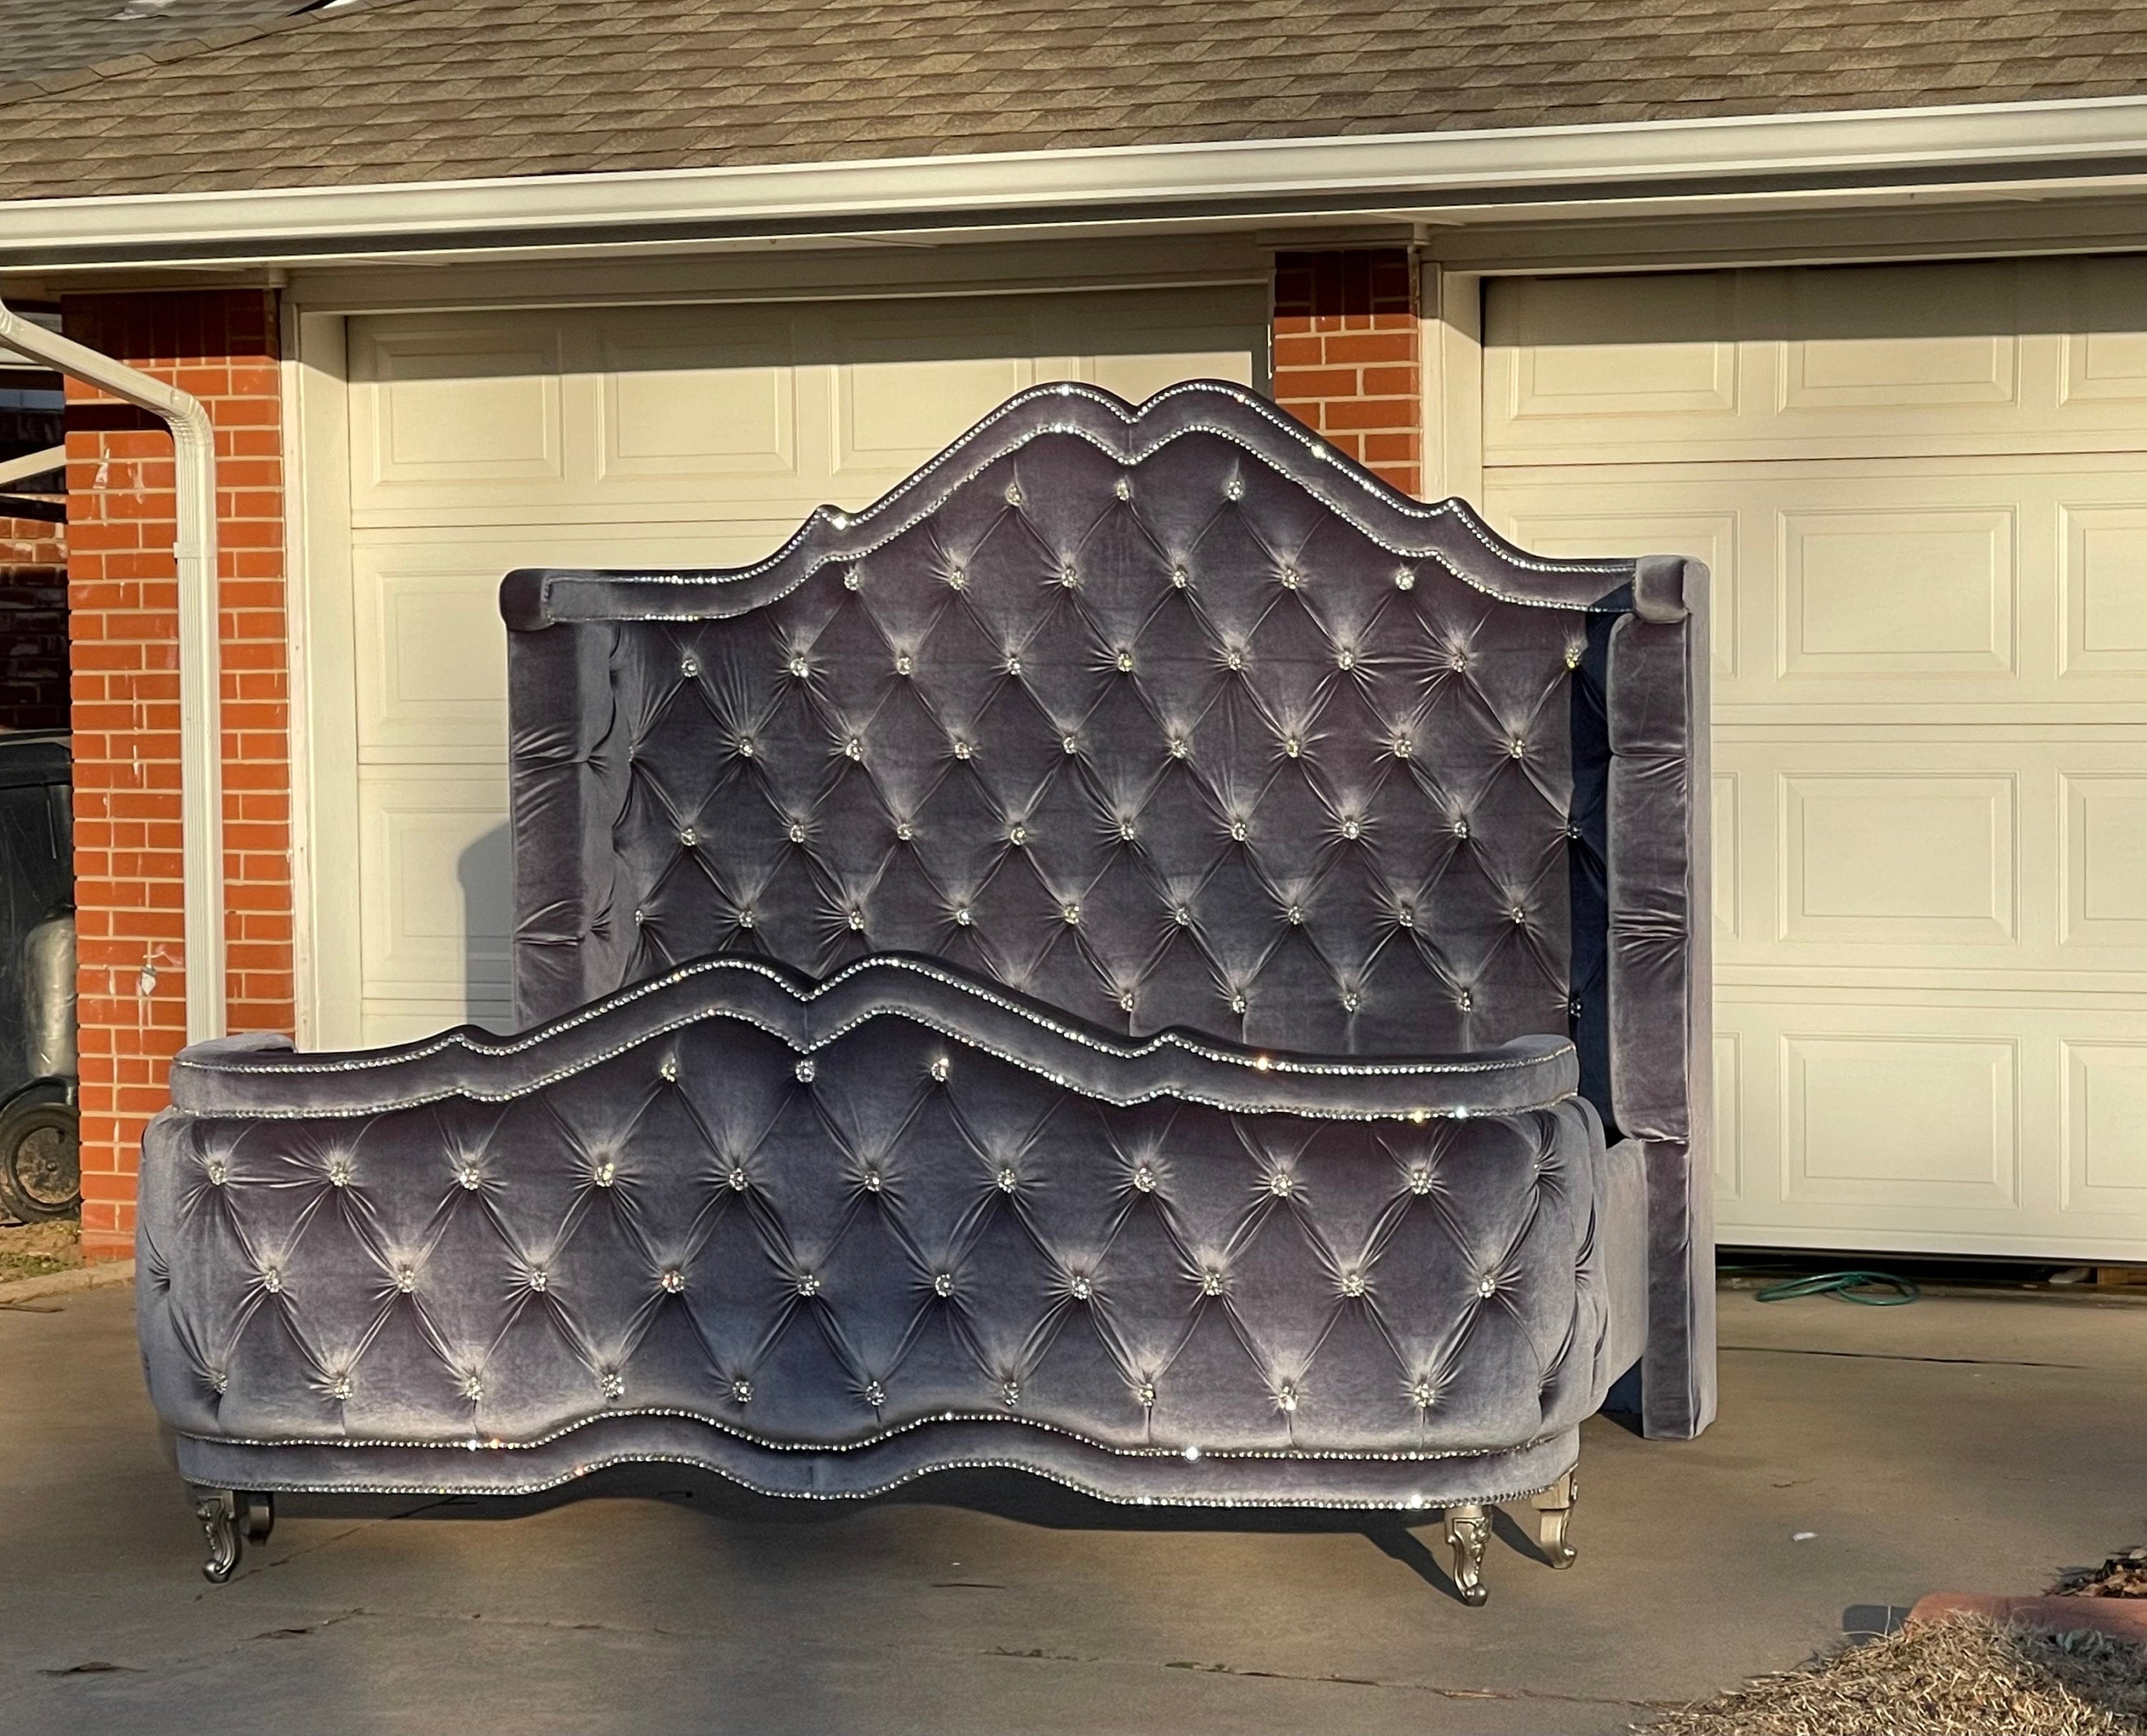 King Upholstered Linen Platform Bed Frame with Curved Tufted Headboard  Beige-ModernLuxe